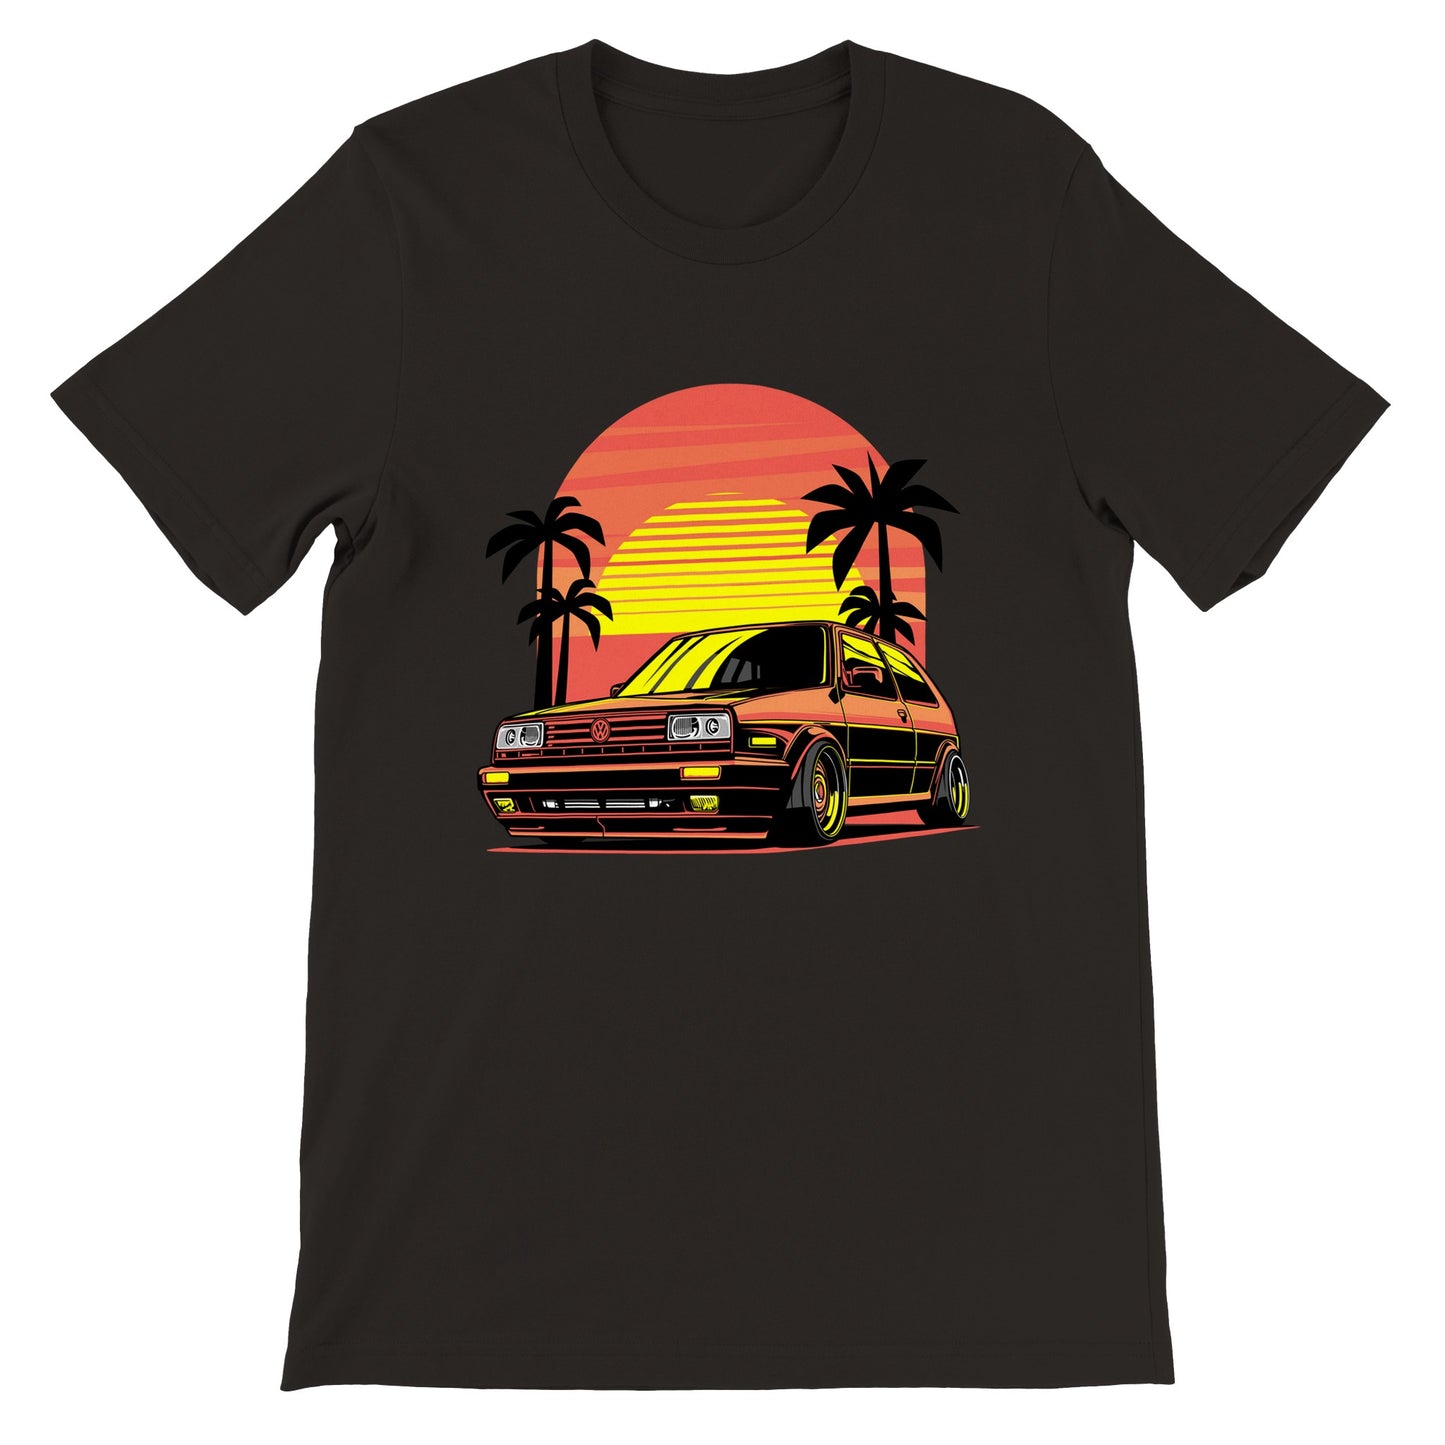 Car T-shirt - VW Golf California Sunset Artwork - Premium Unisex T-shirt